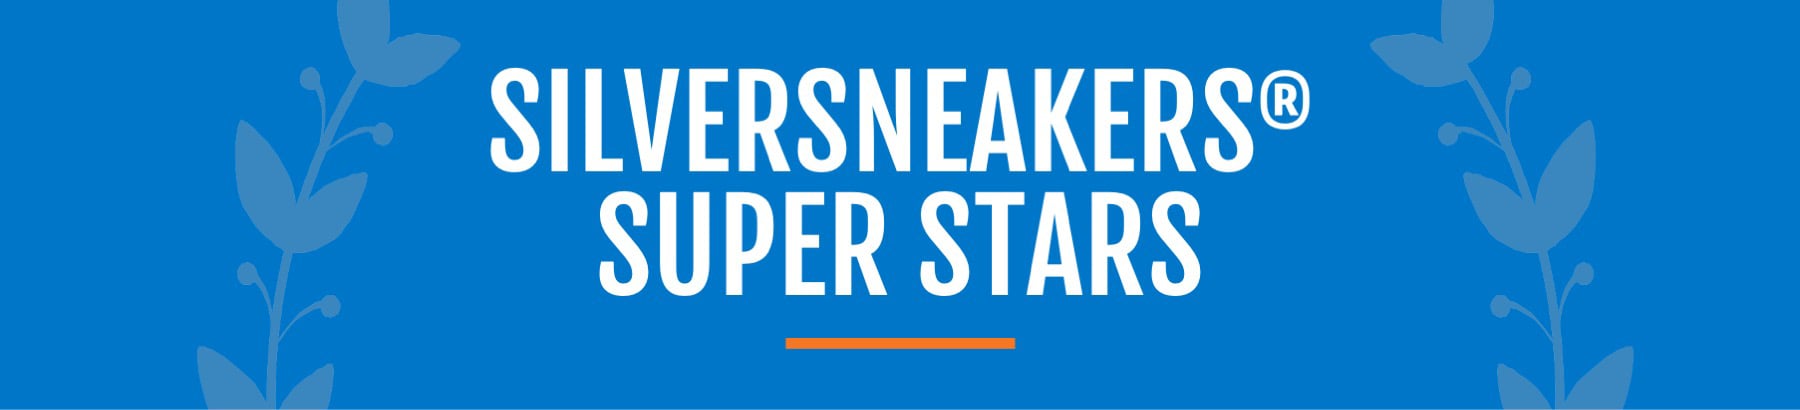 SilverSneakers Super Stars